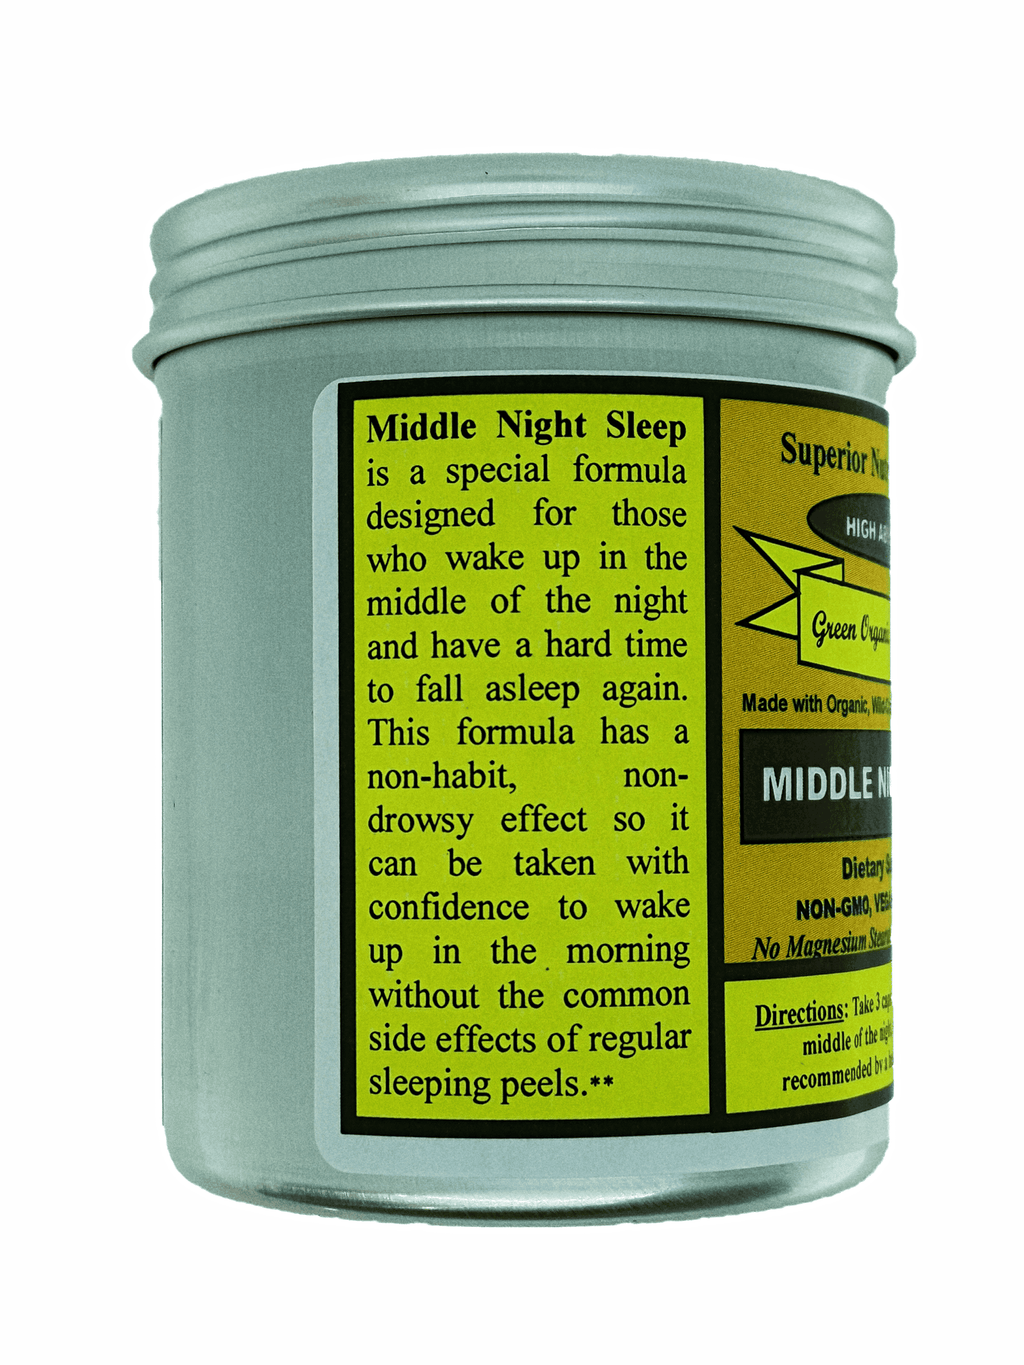 Buy organic vitamins - Middle night sleep supplement details 